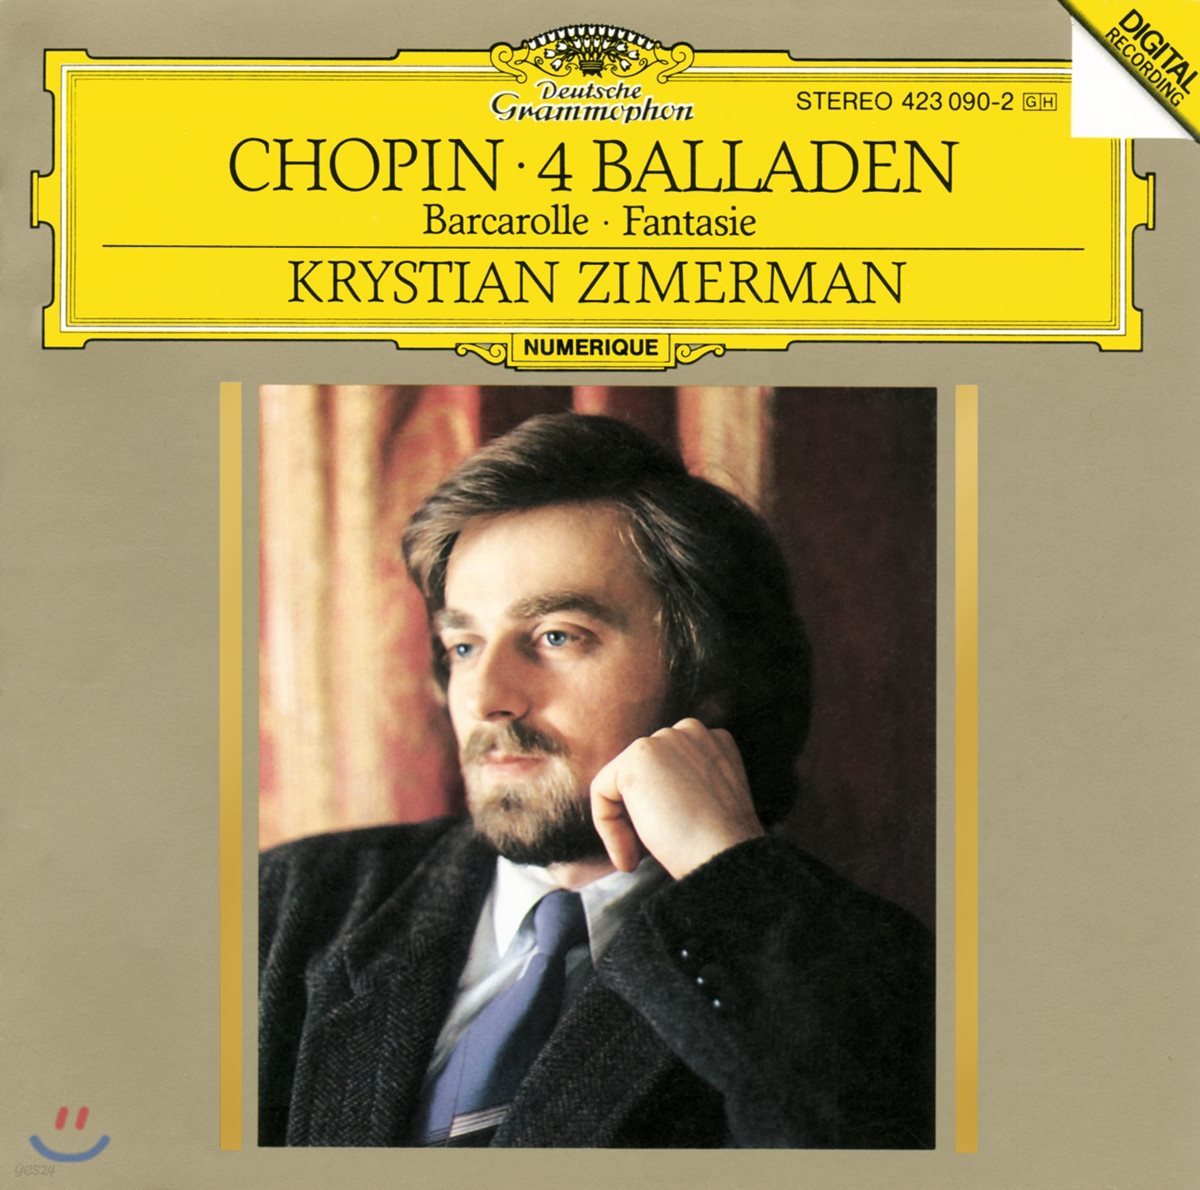 Krystian Zimerman 쇼팽: 발라드 전곡, 뱃노래, 환상곡 - 크리스티안 지메르만 (Chopin: 4 Ballades, Barcarolle, Fantasie)